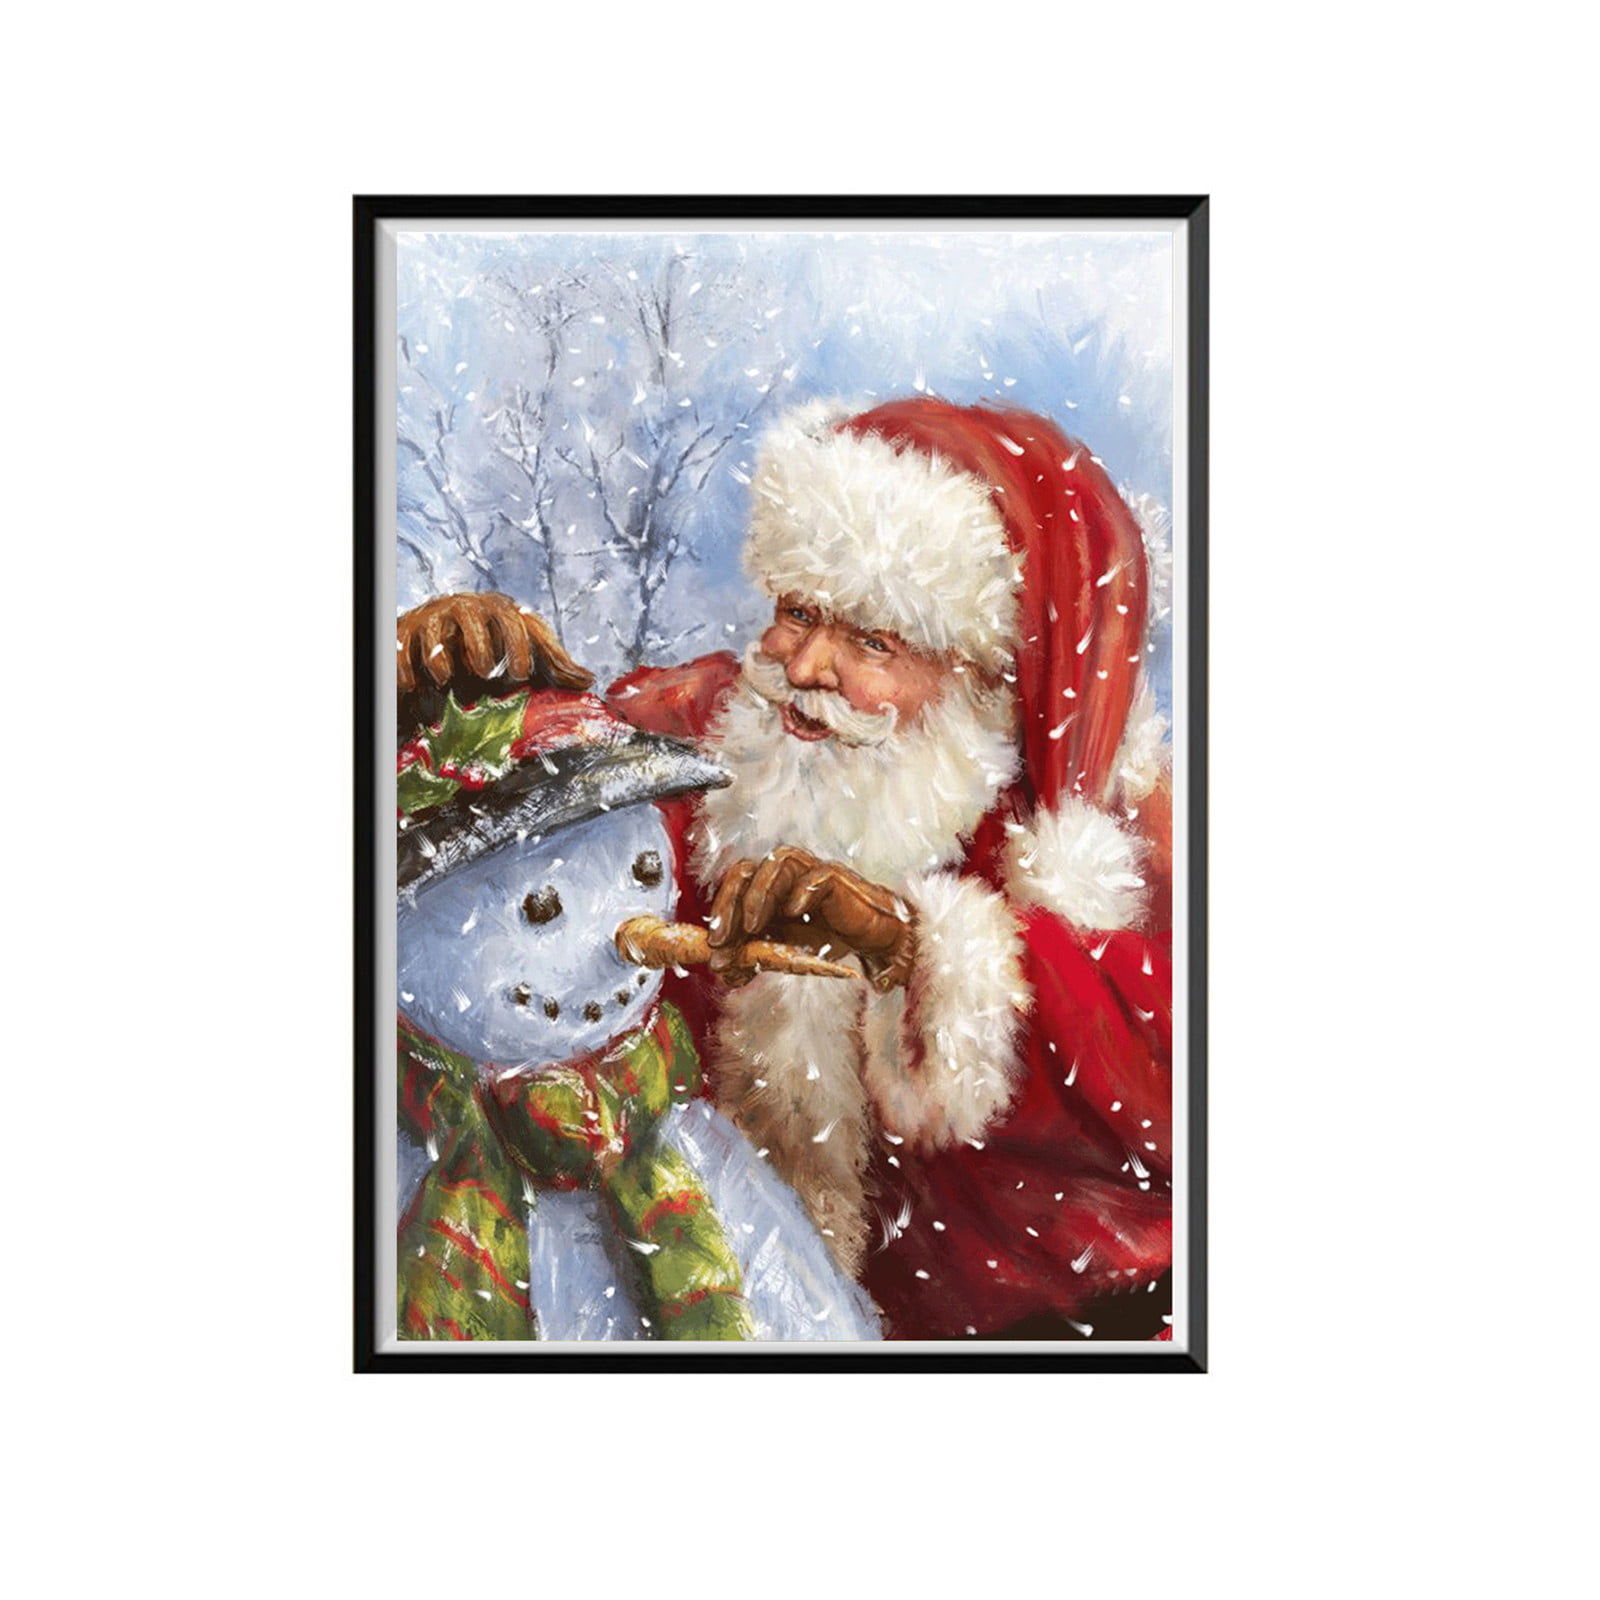 SDJMa Merry Christmas Diamond Art Painting Kits for Adults - Santa